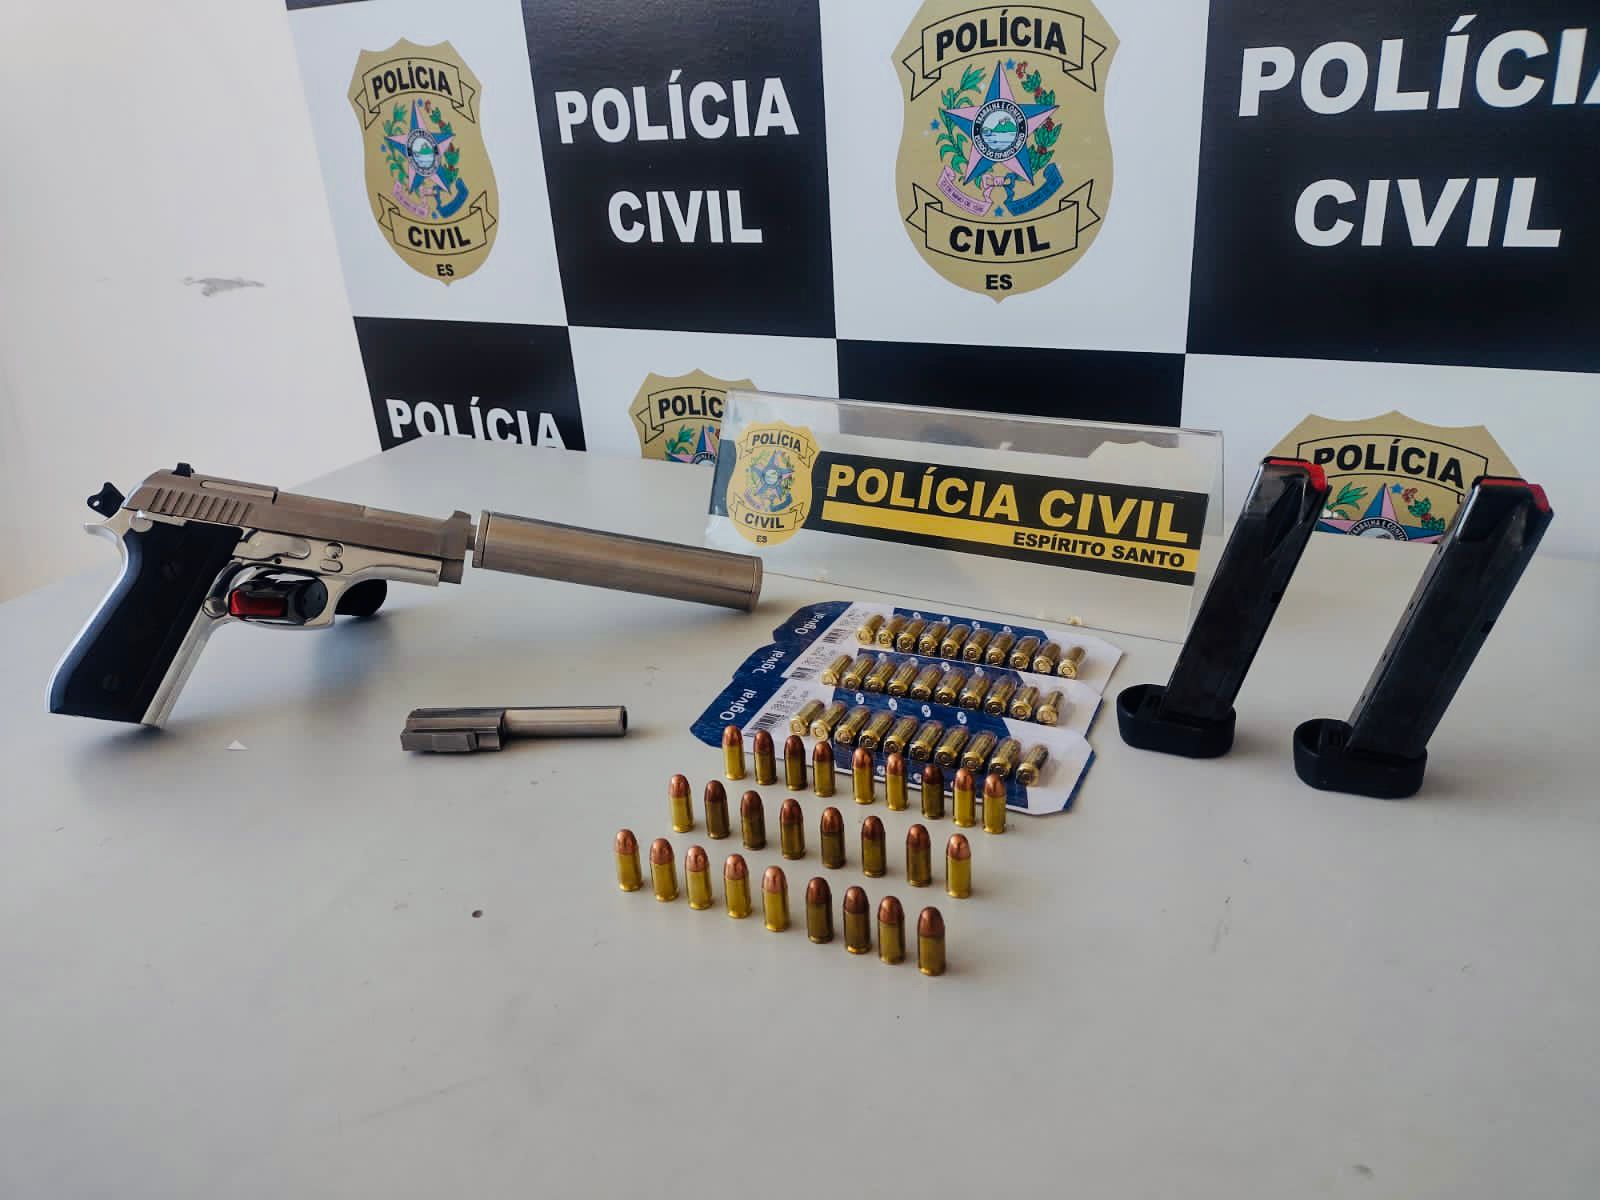 DHPP da Serra apreende pistola com silenciador e prende suspeito no bairro São Marcos II